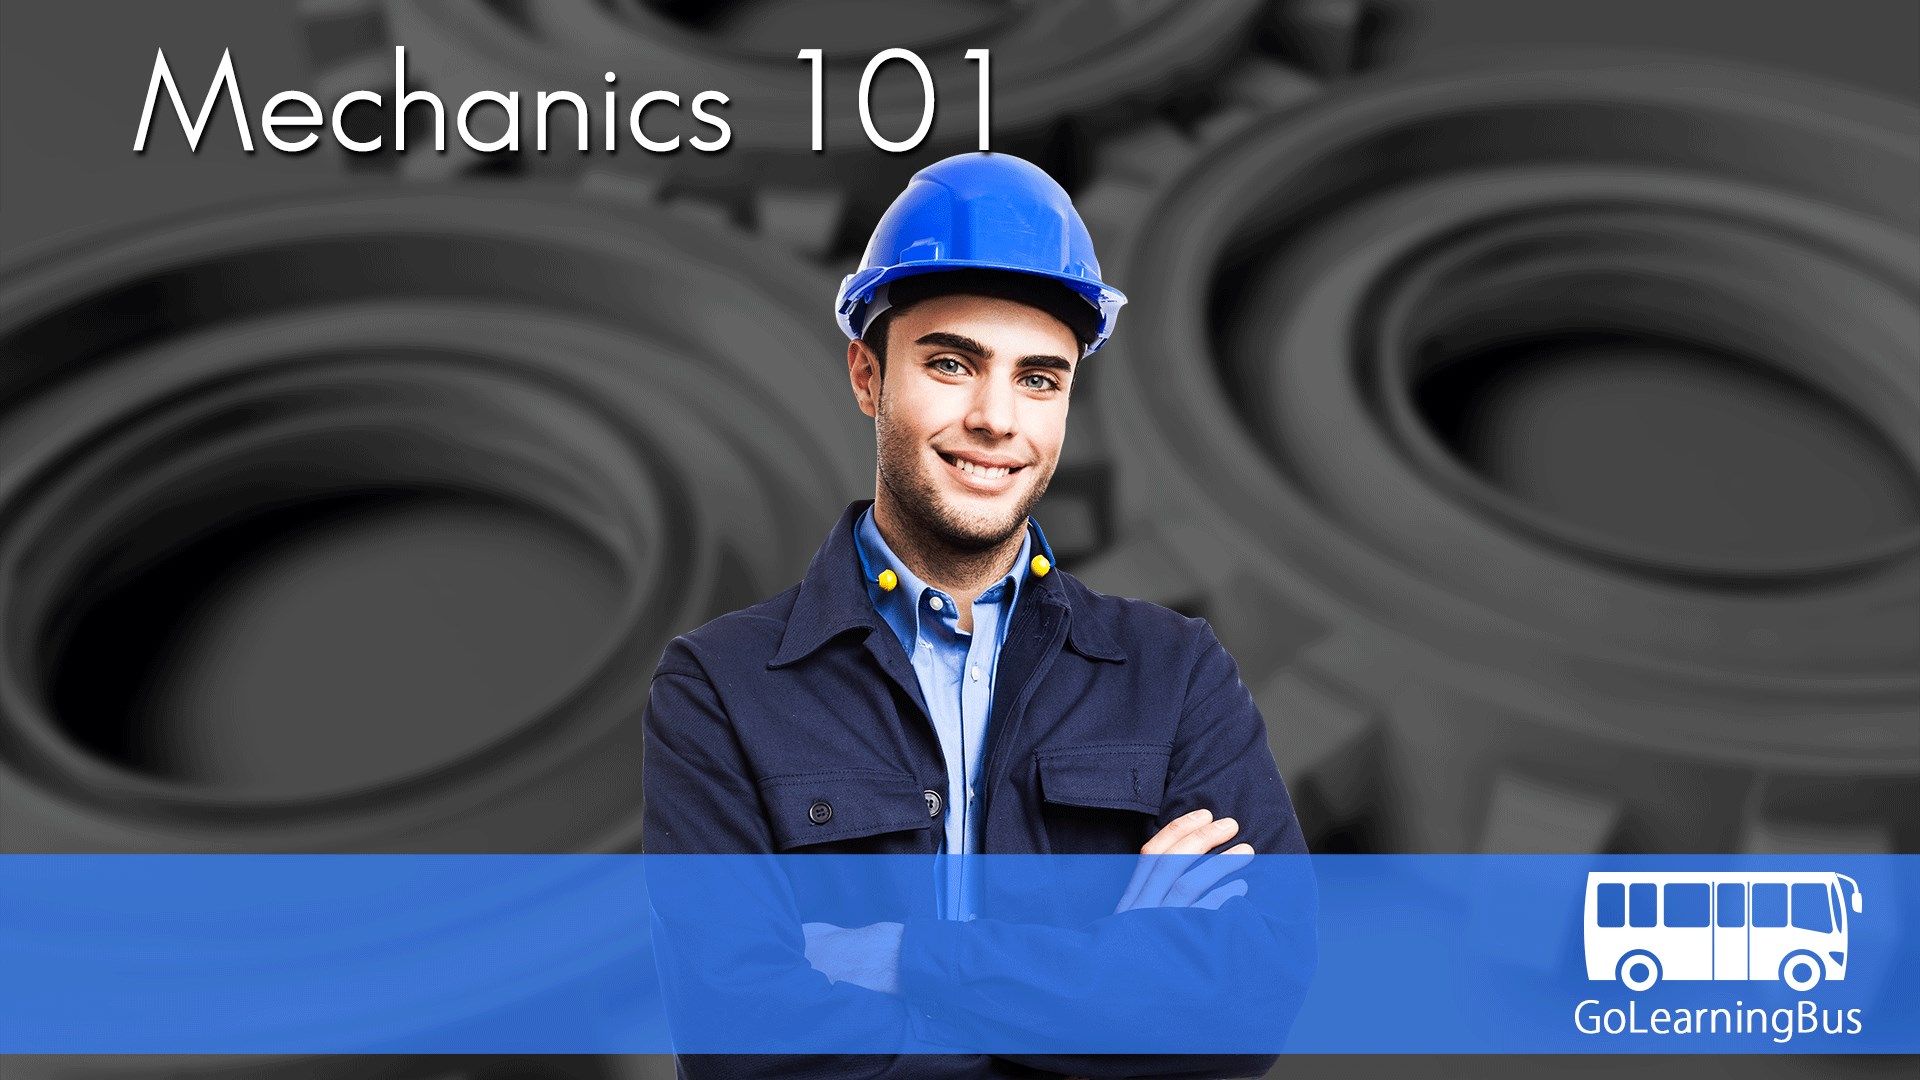 Mechanics 101 by GoLearningBus